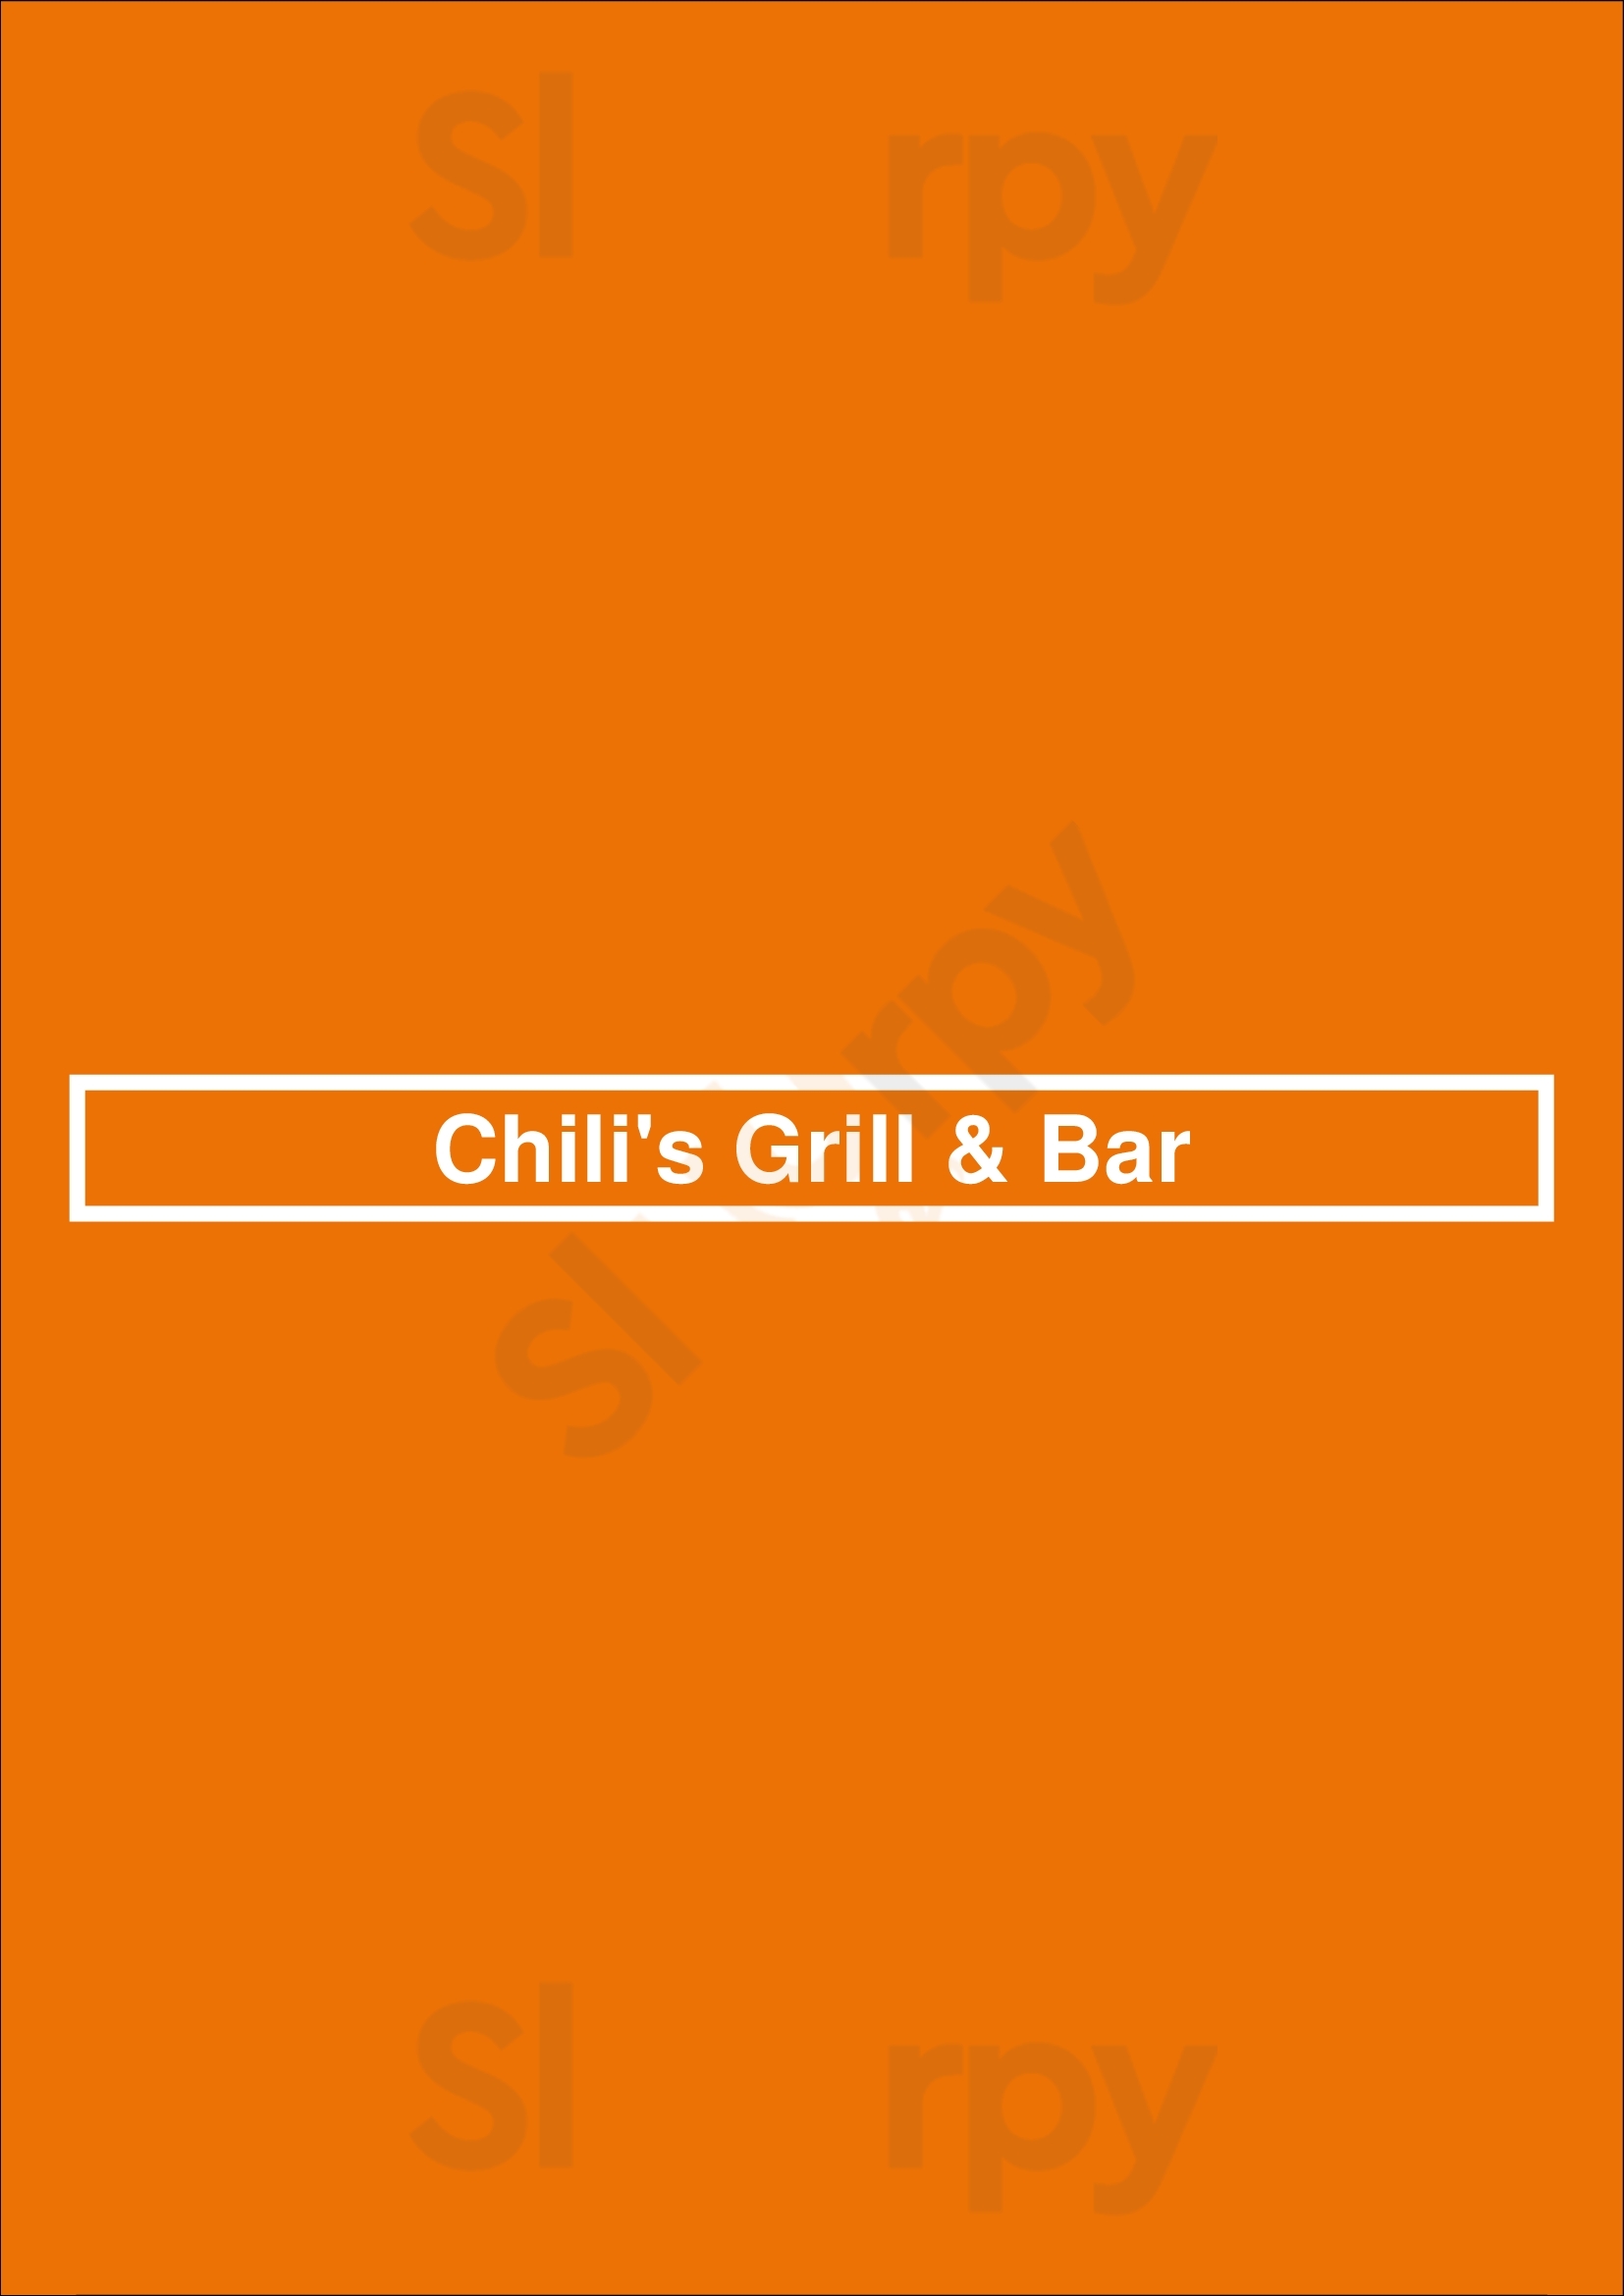 Chili's Grill & Bar Denver Menu - 1